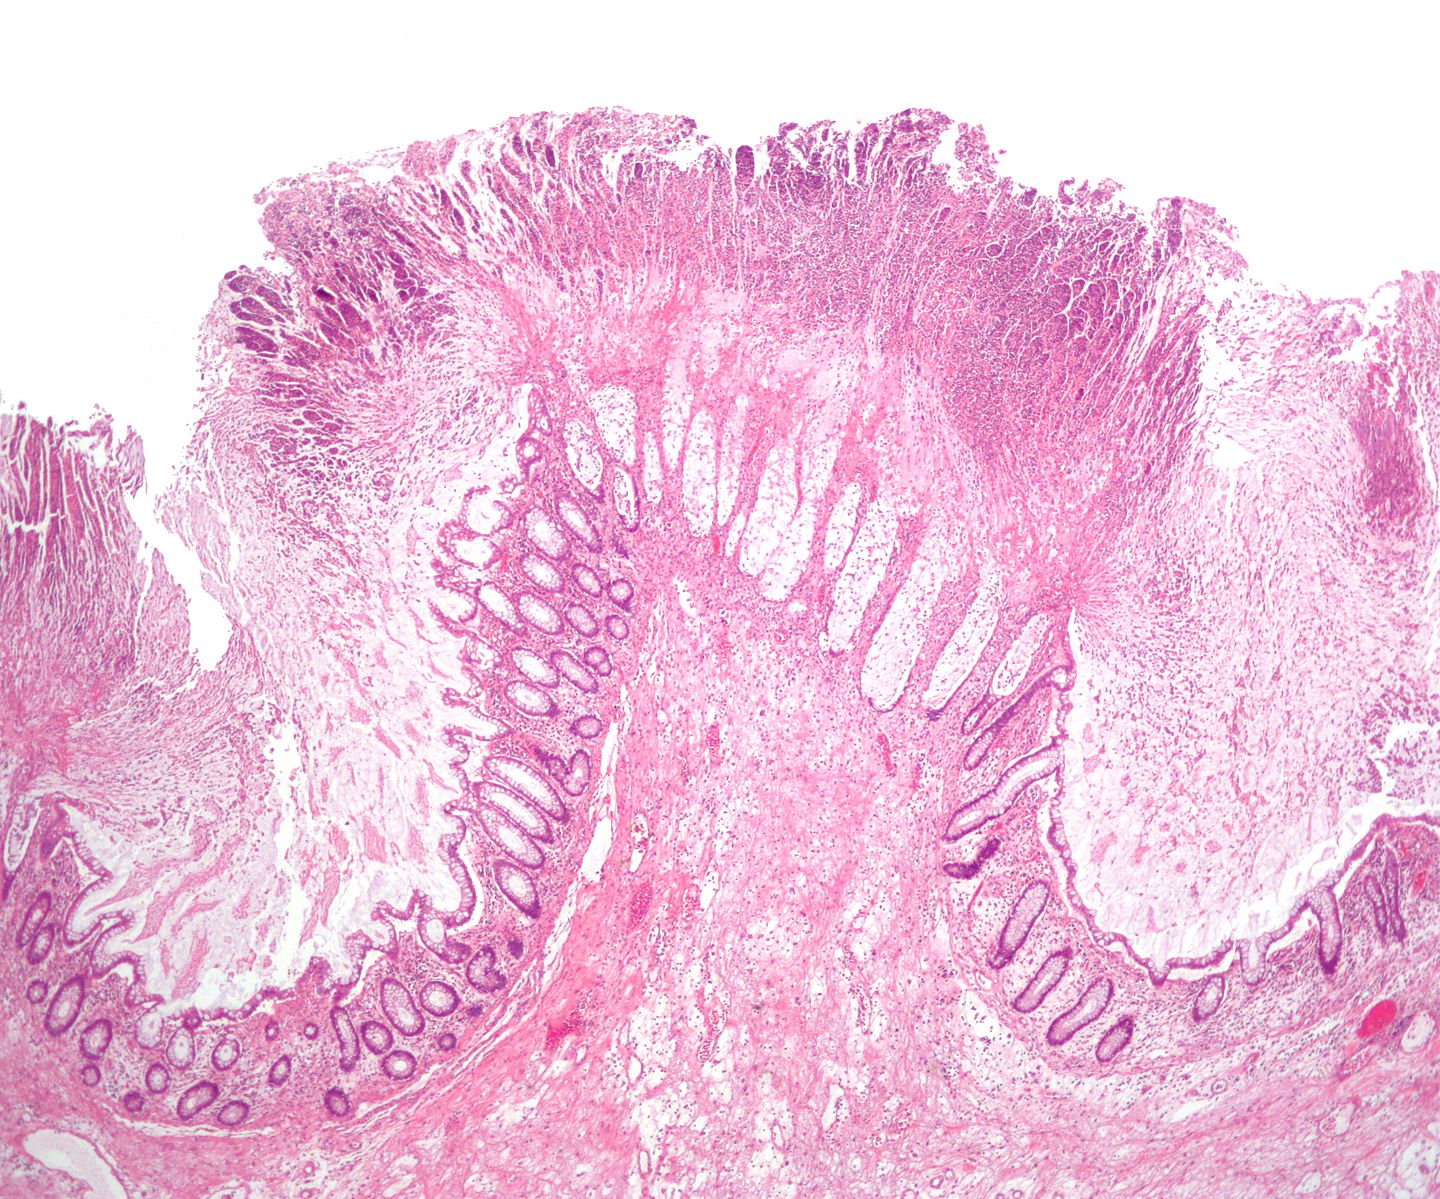 Pseudomembranous colitis. H& E staining showing pseudomembranes in Clostridium colitis [6]